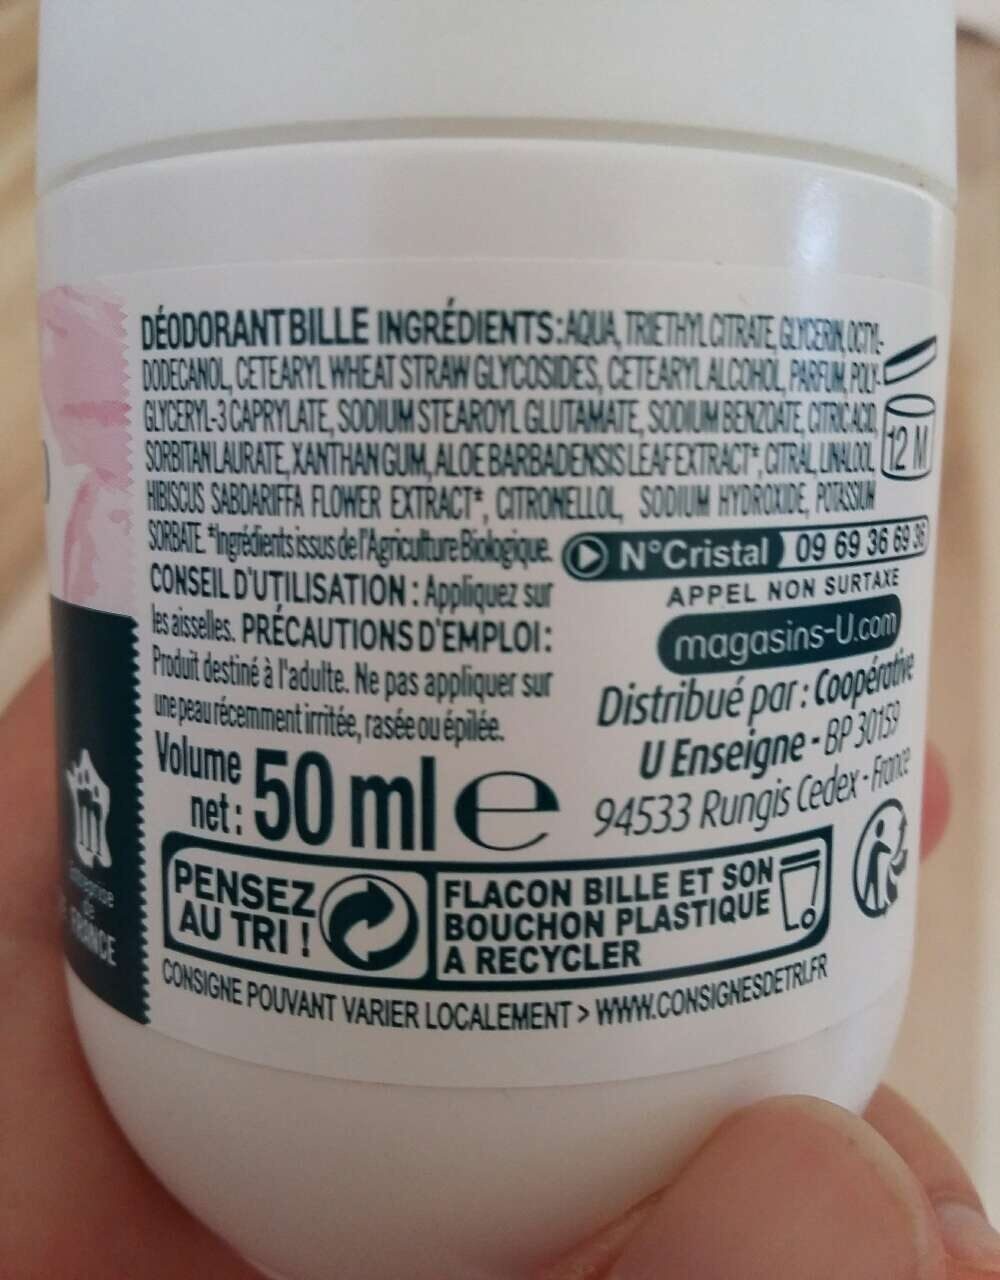 Déodorant - Ingredients - fr